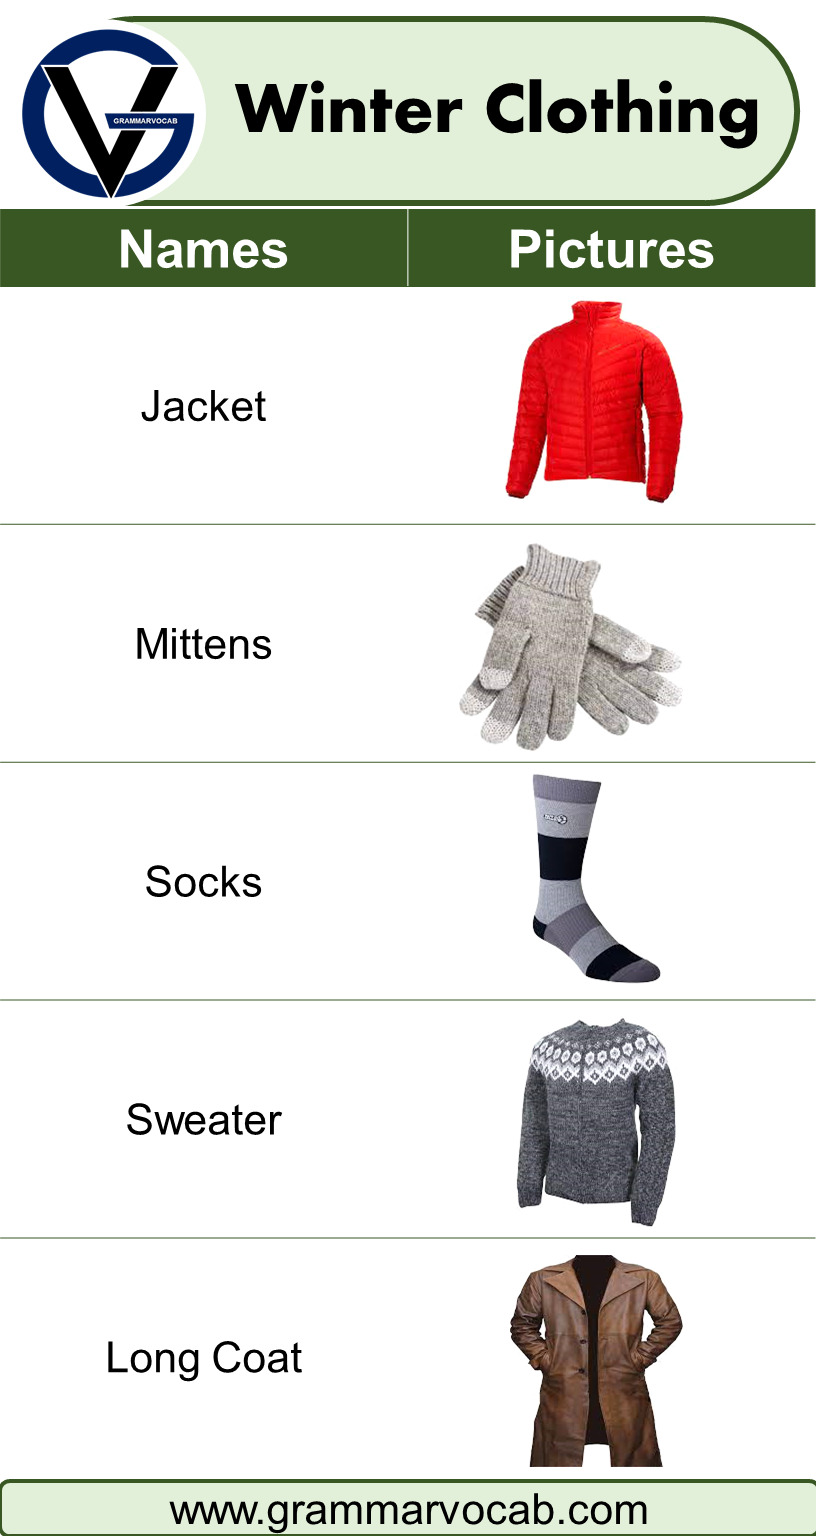 Winter clothing vocabulary